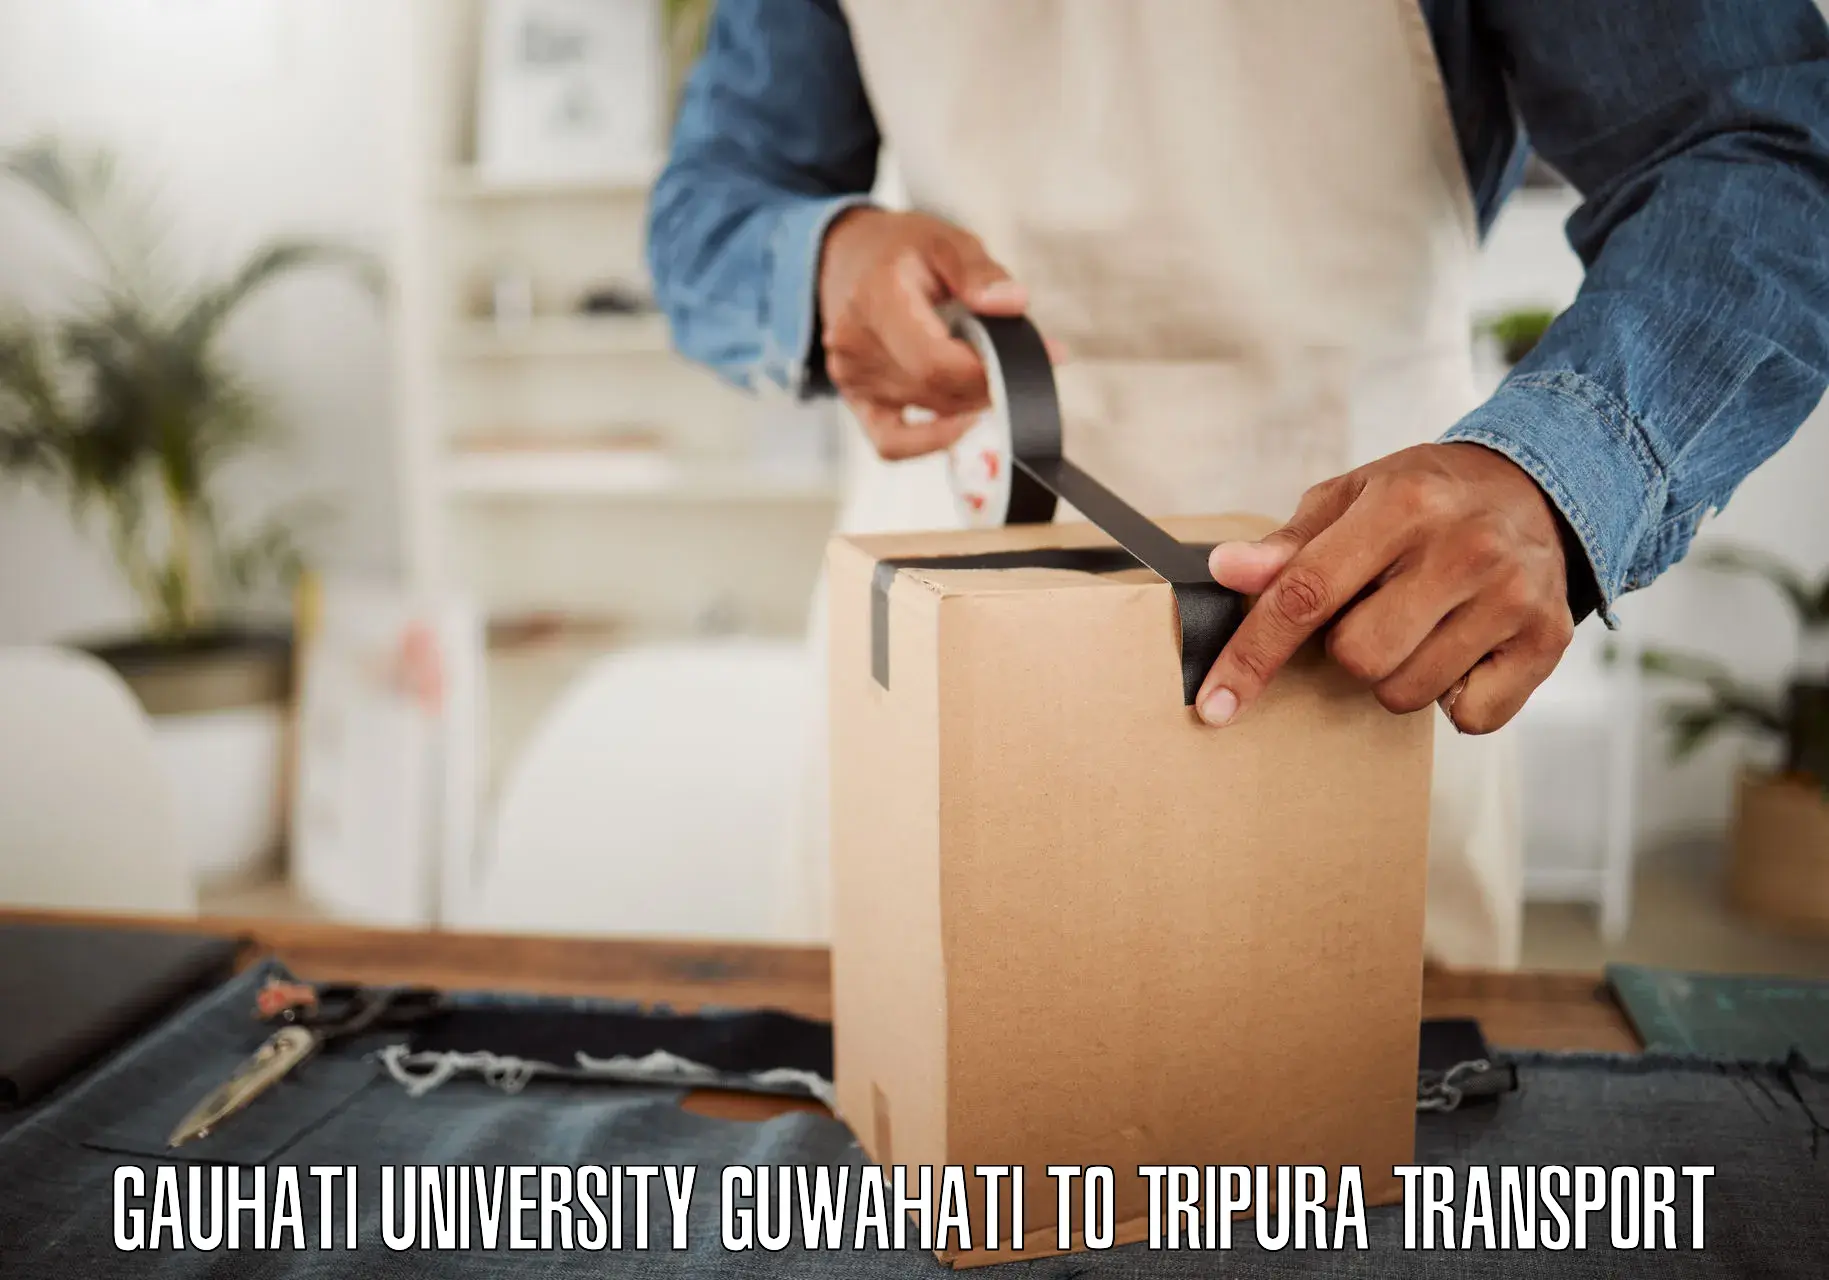 Furniture transport service Gauhati University Guwahati to Dharmanagar